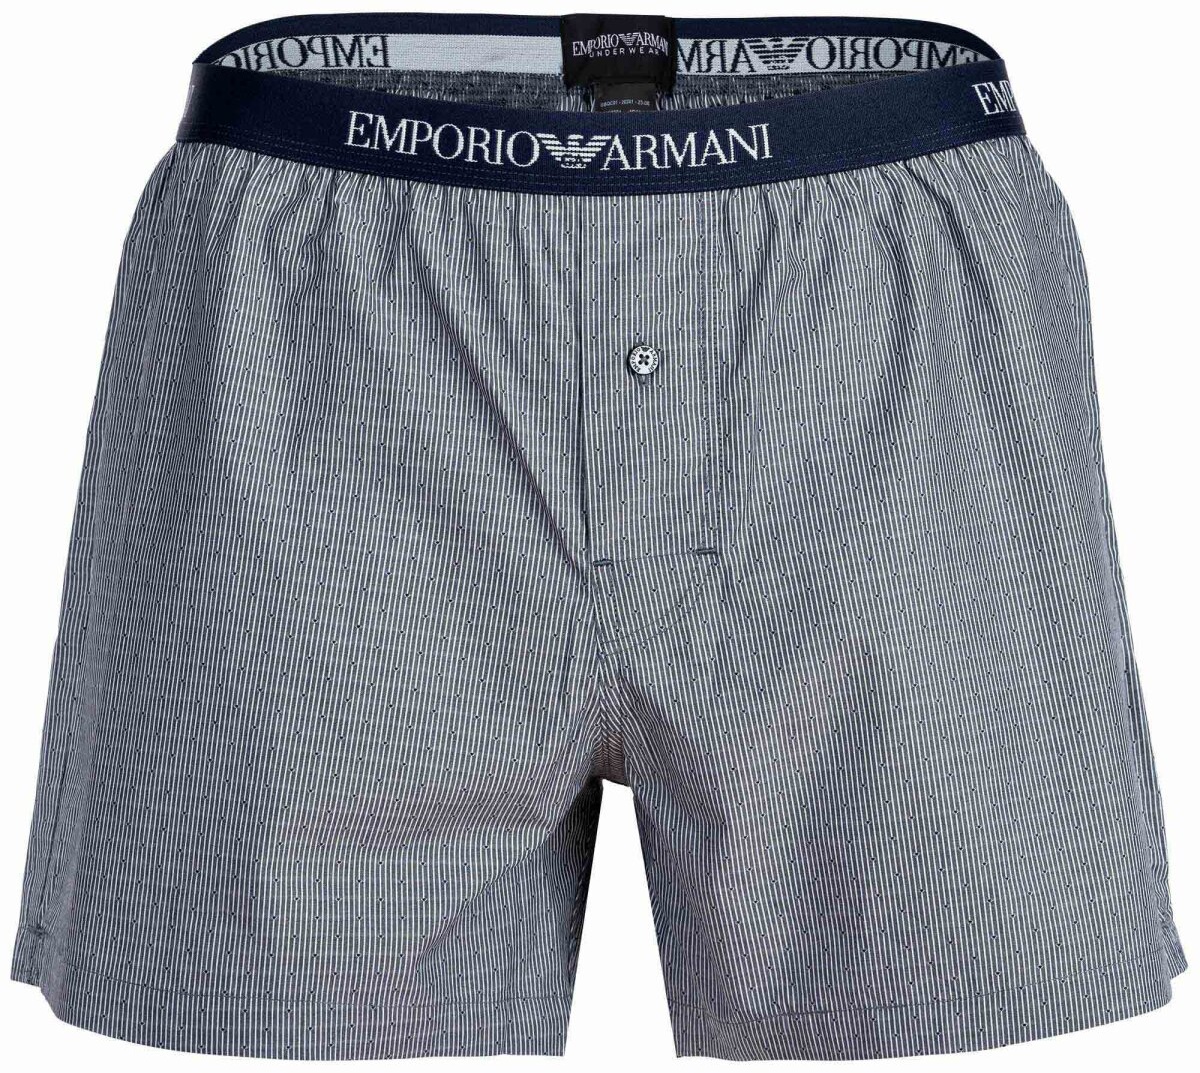 EMPORIO ARMANI Herren Web-Boxershorts - Yarn Dyed Woven, Pyjama Shorts, gemustert Marine XL